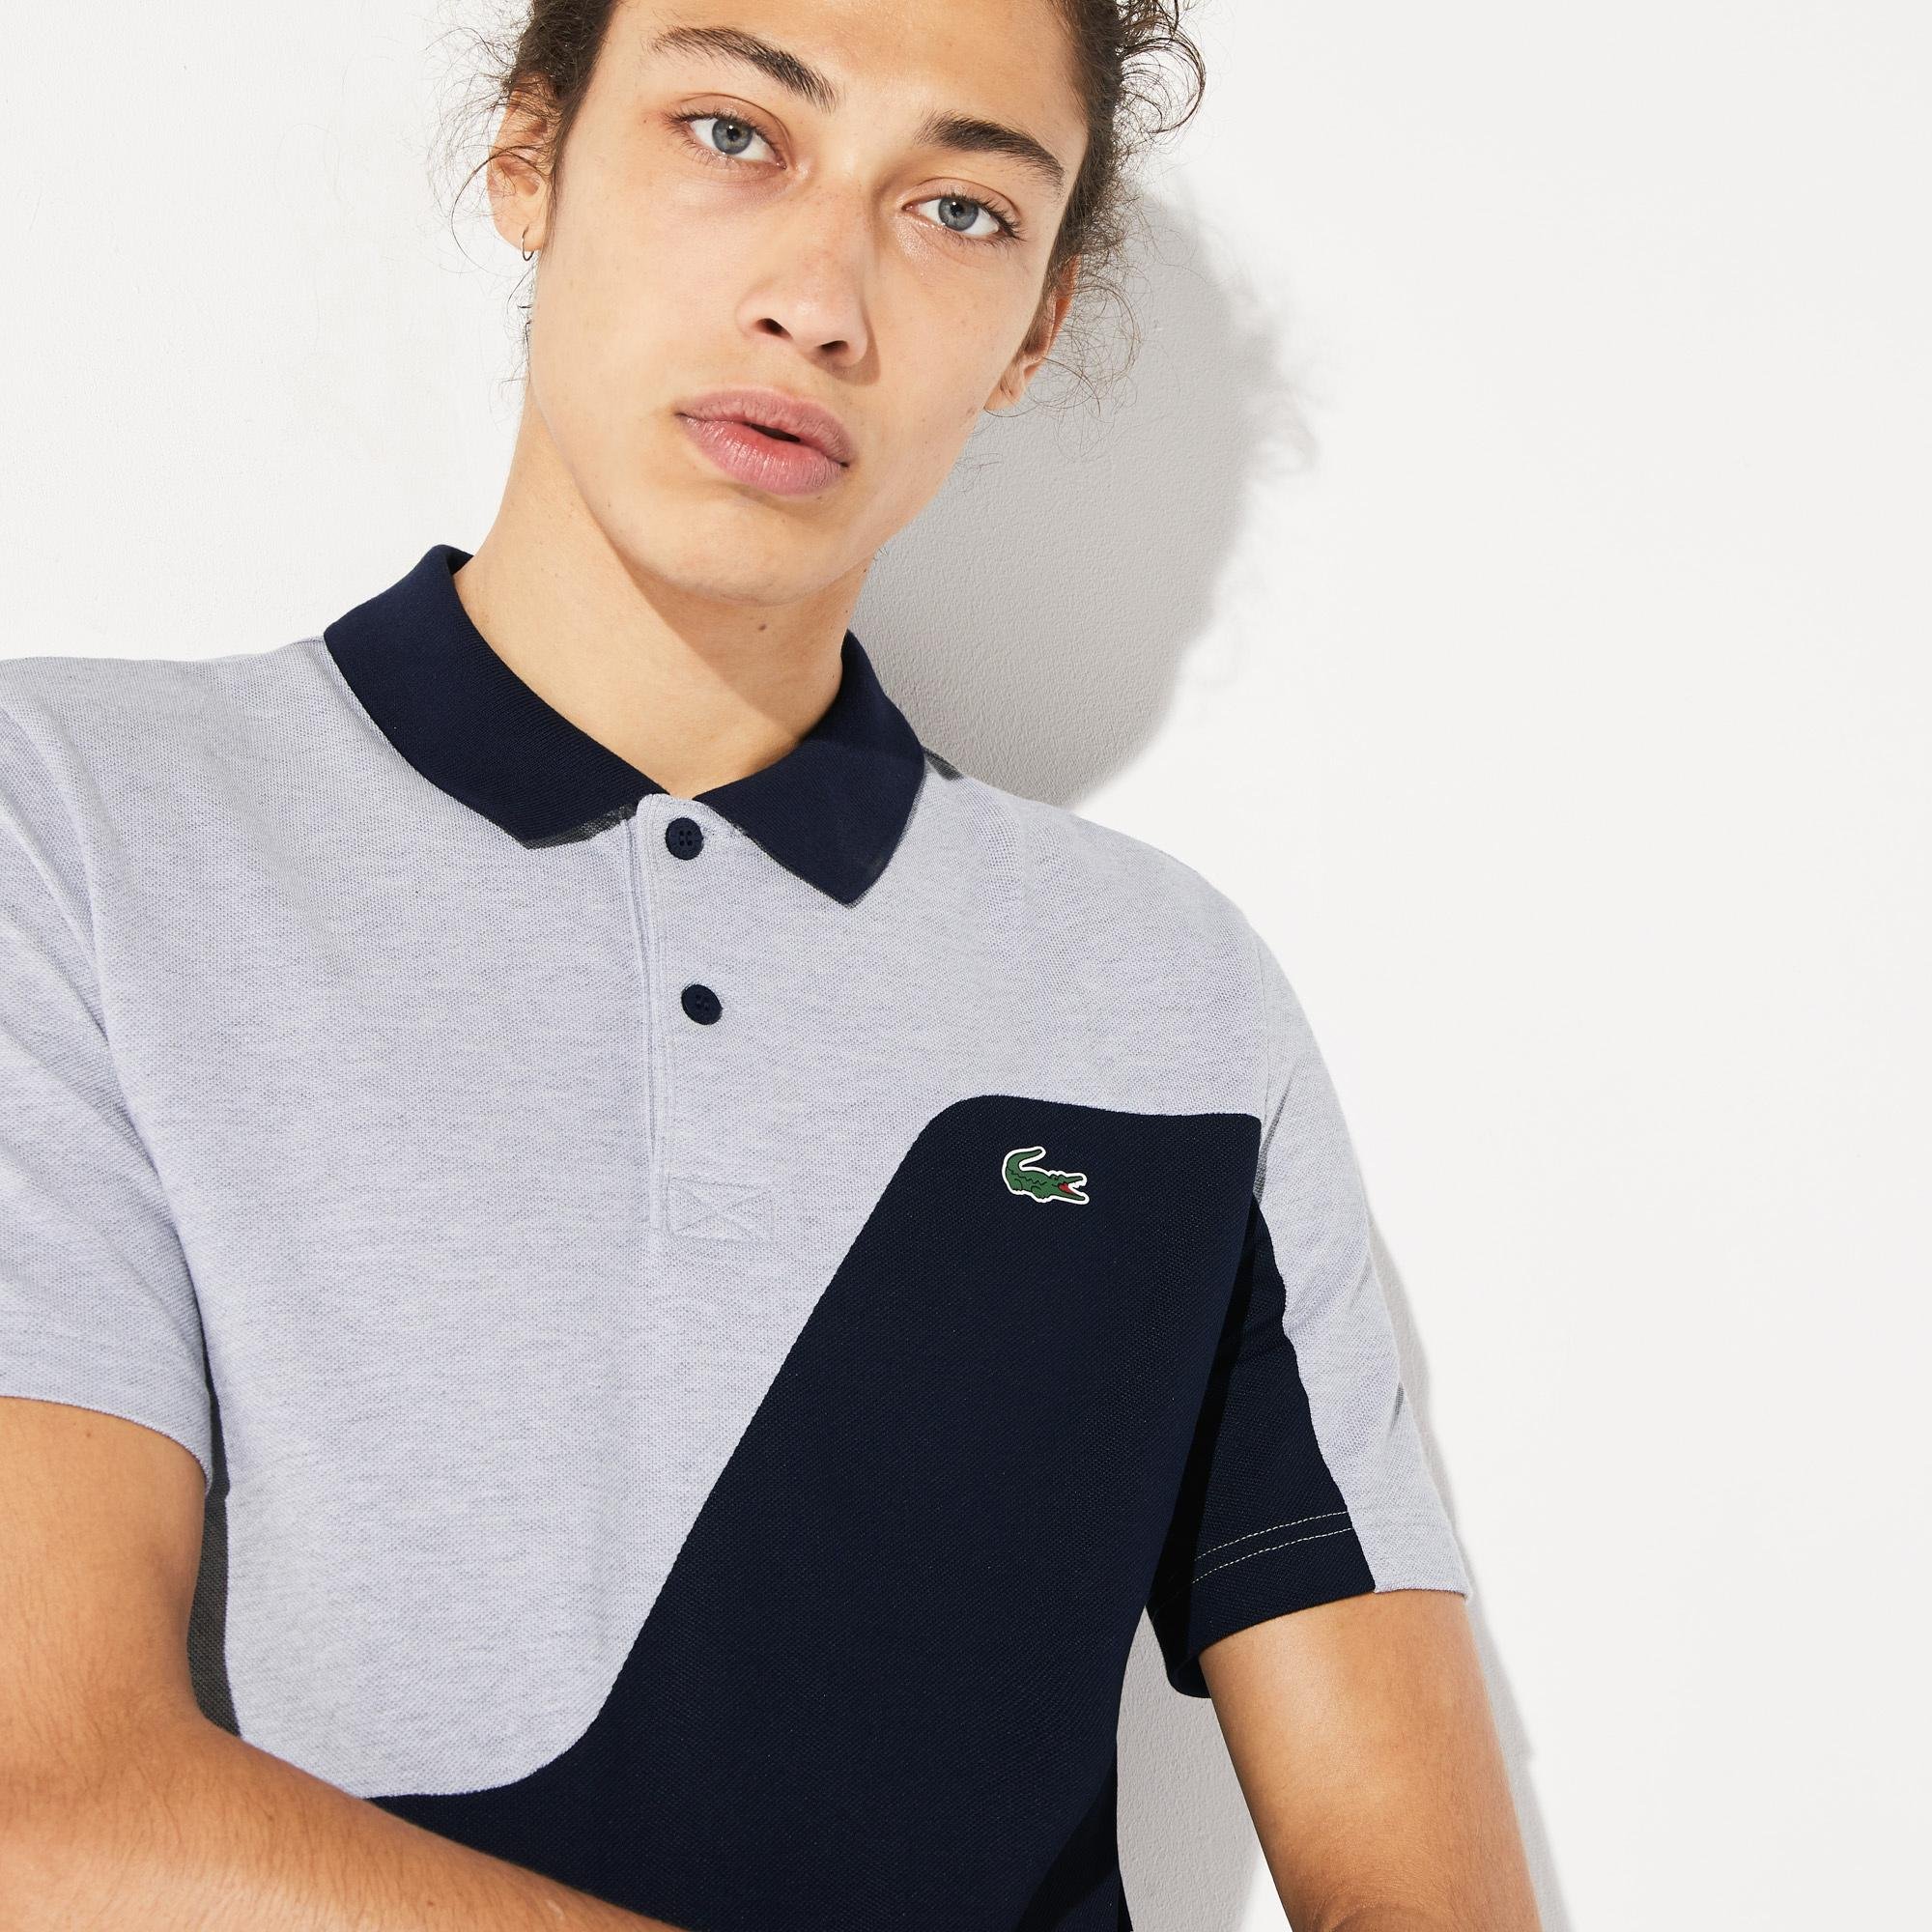 Lacoste Men's Sport Two-Tone Breathable Piqué Golf Polo Shirt